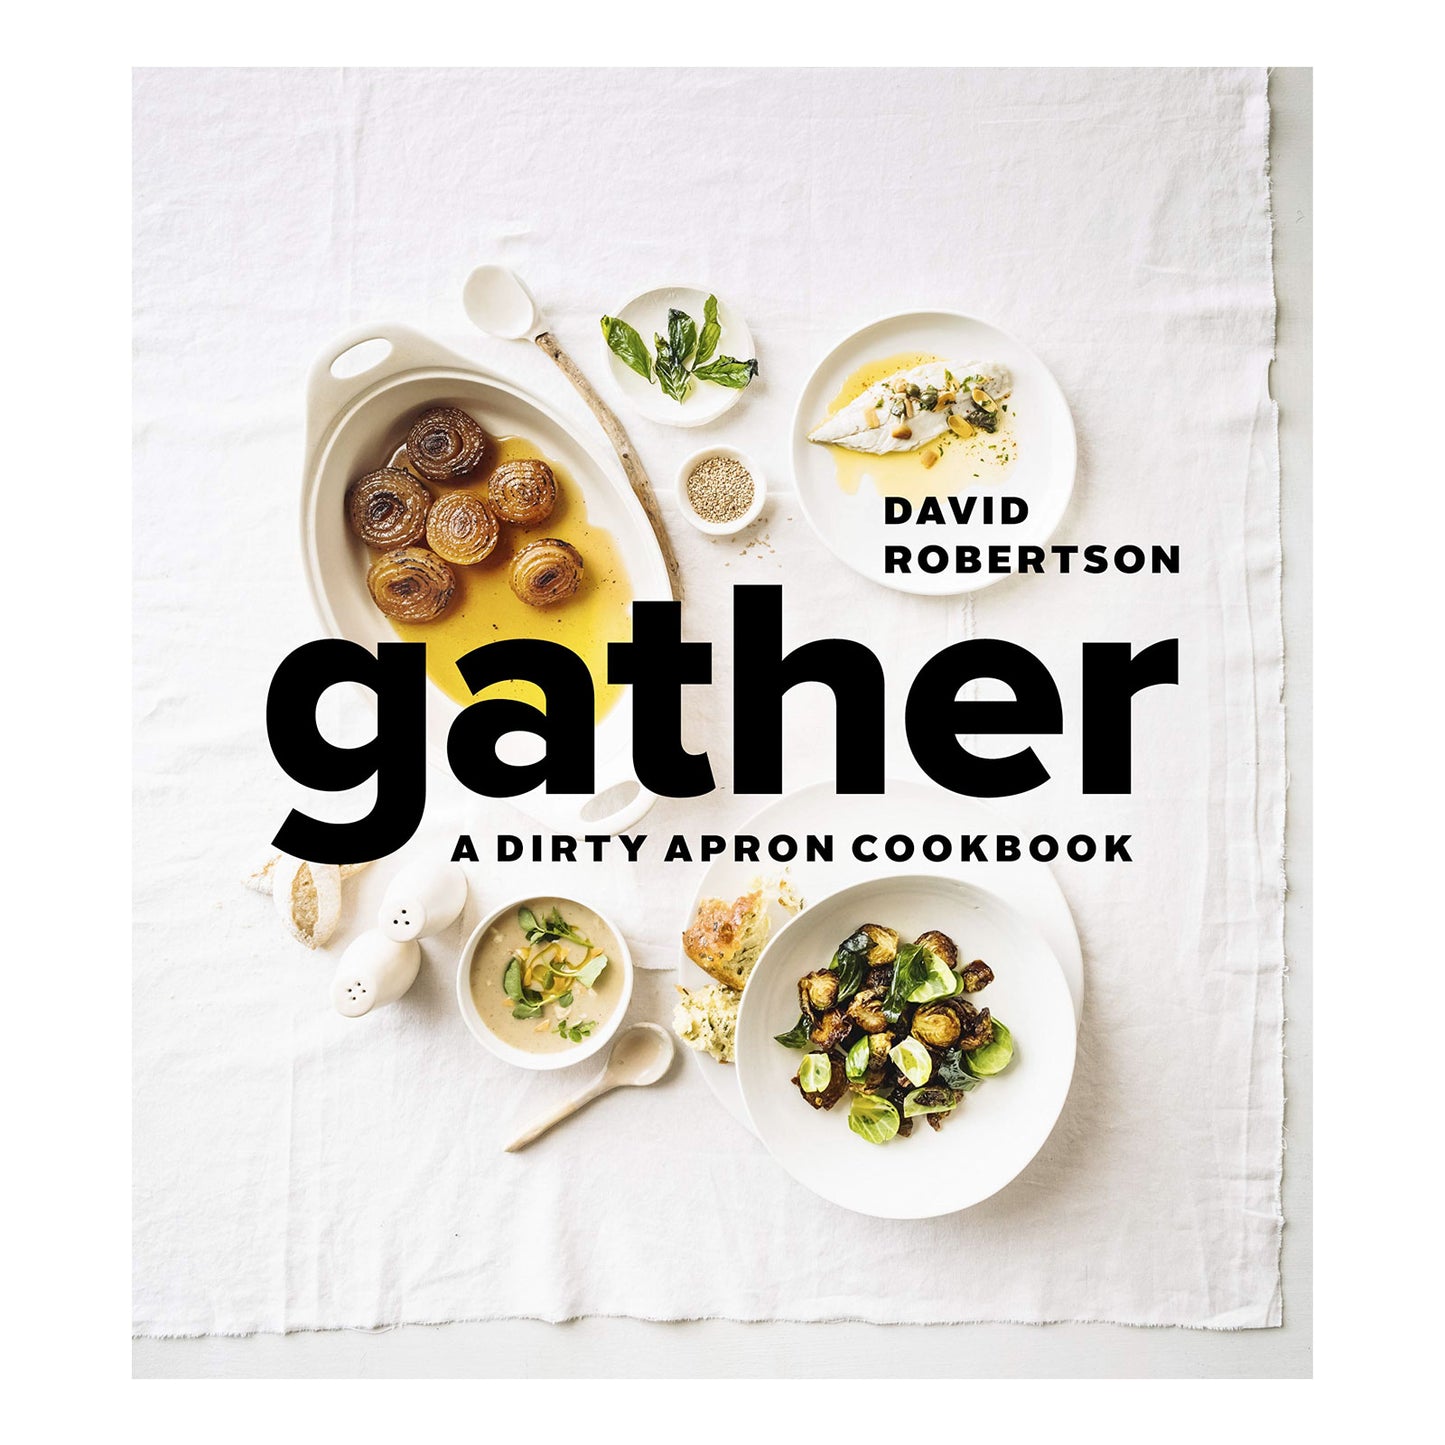 Gather: A Dirty Apron Cookbook by David Robertson